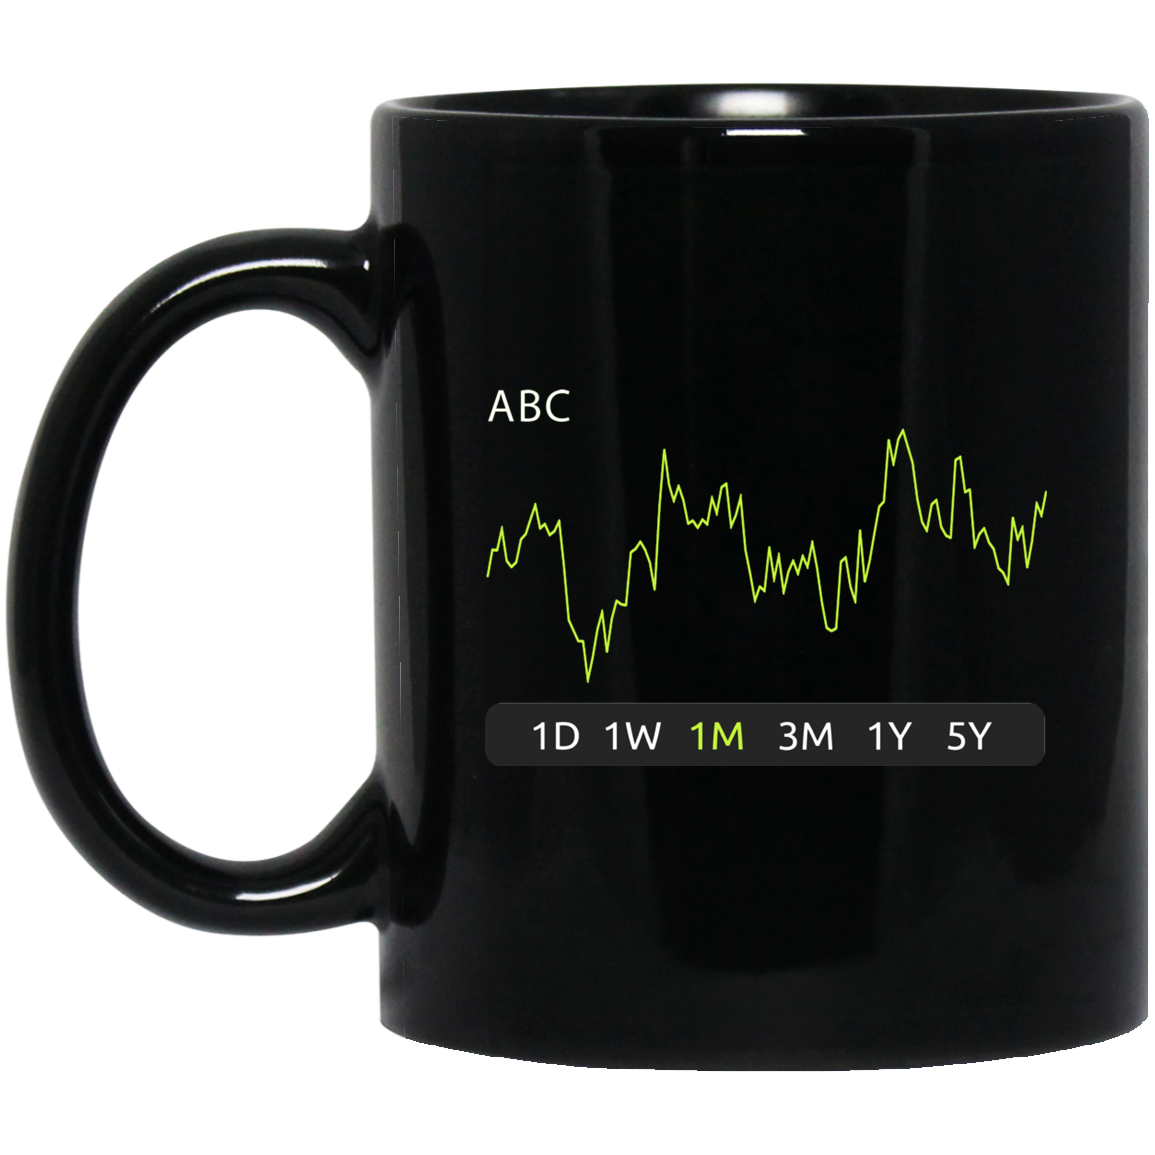 ABC Stock 1m Mug